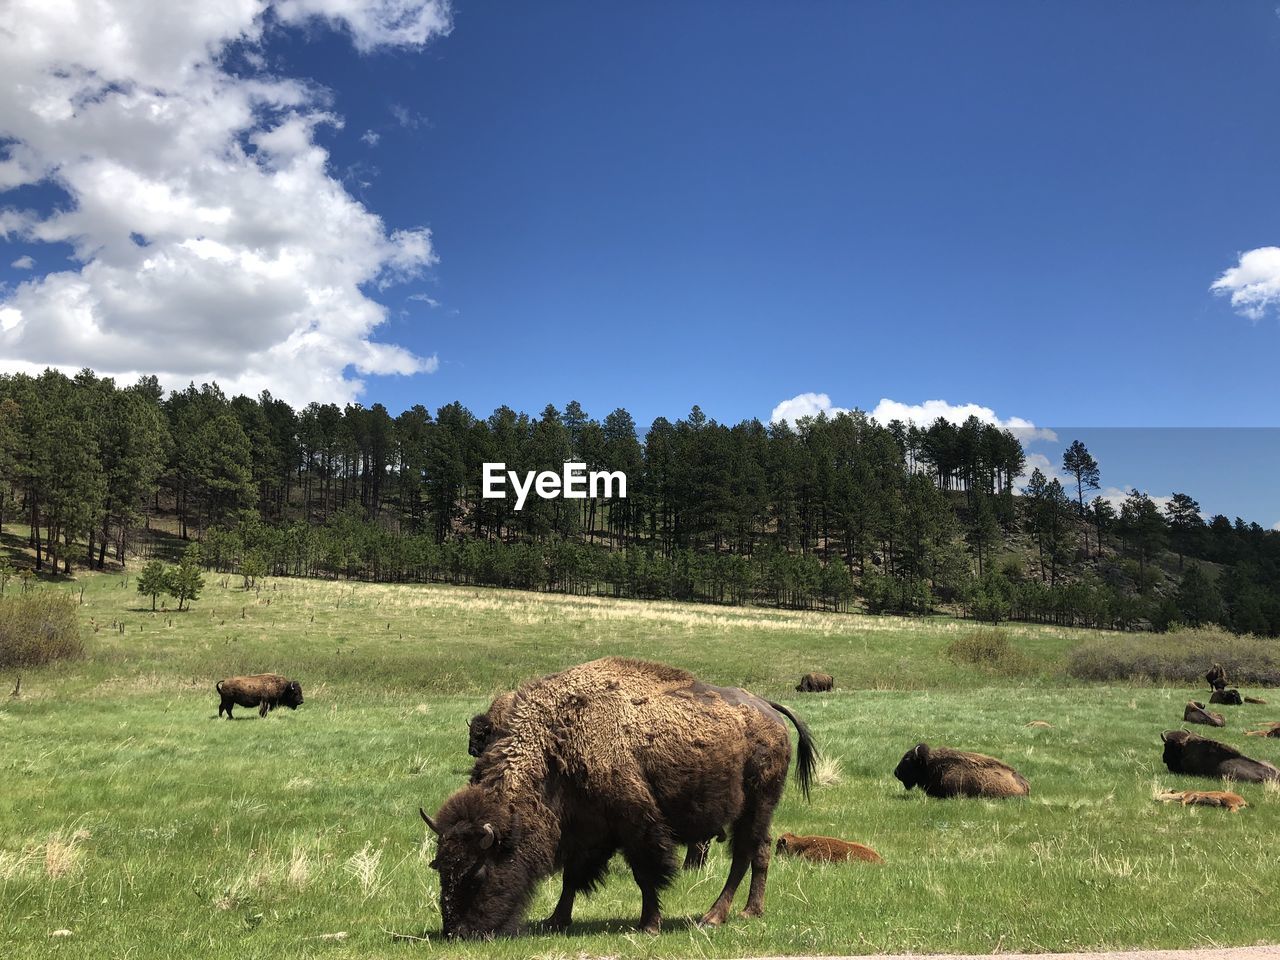 Bison grazing in beautiful field